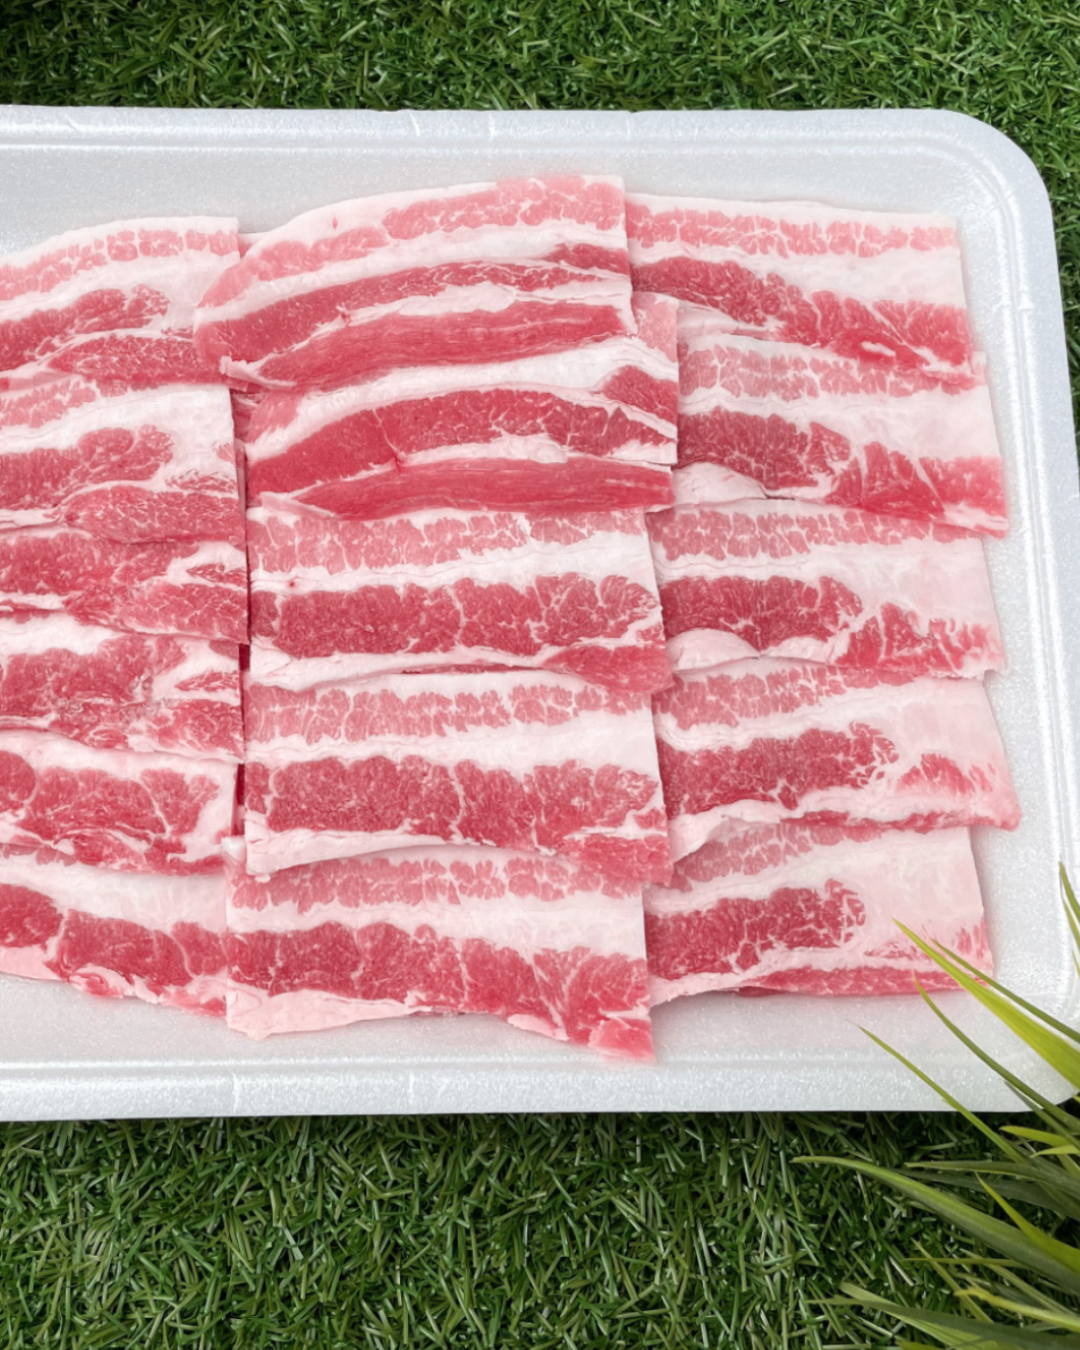 Hokkaido Dream Pork Belly BBQ Cut